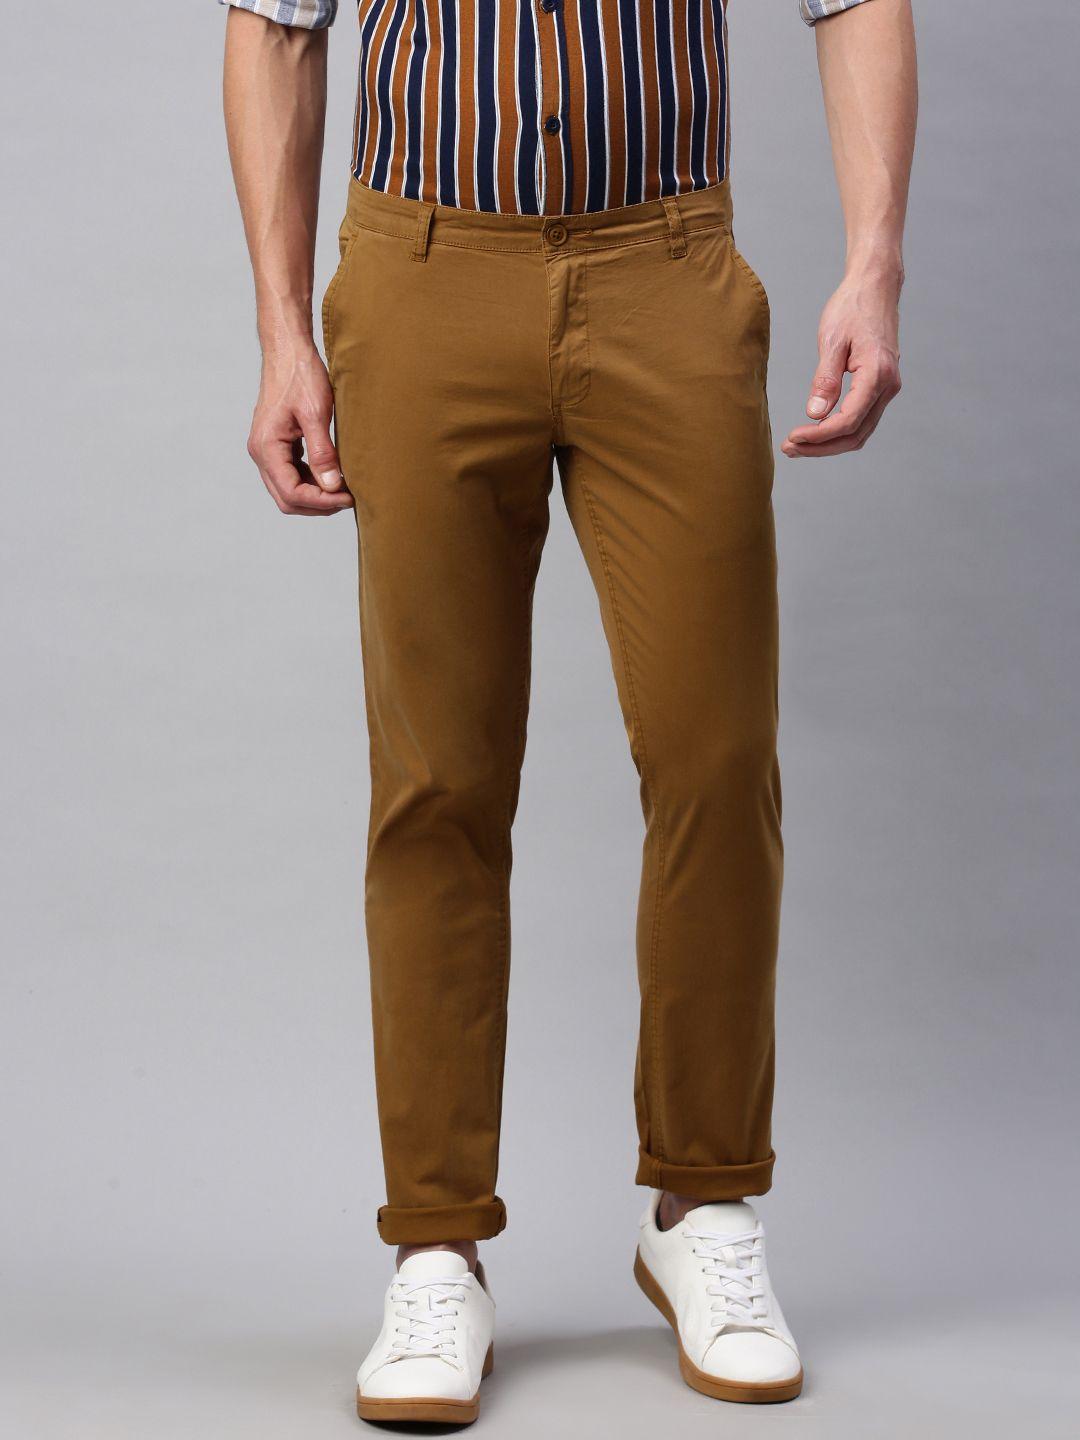 abof men brown slim fit chinos trousers